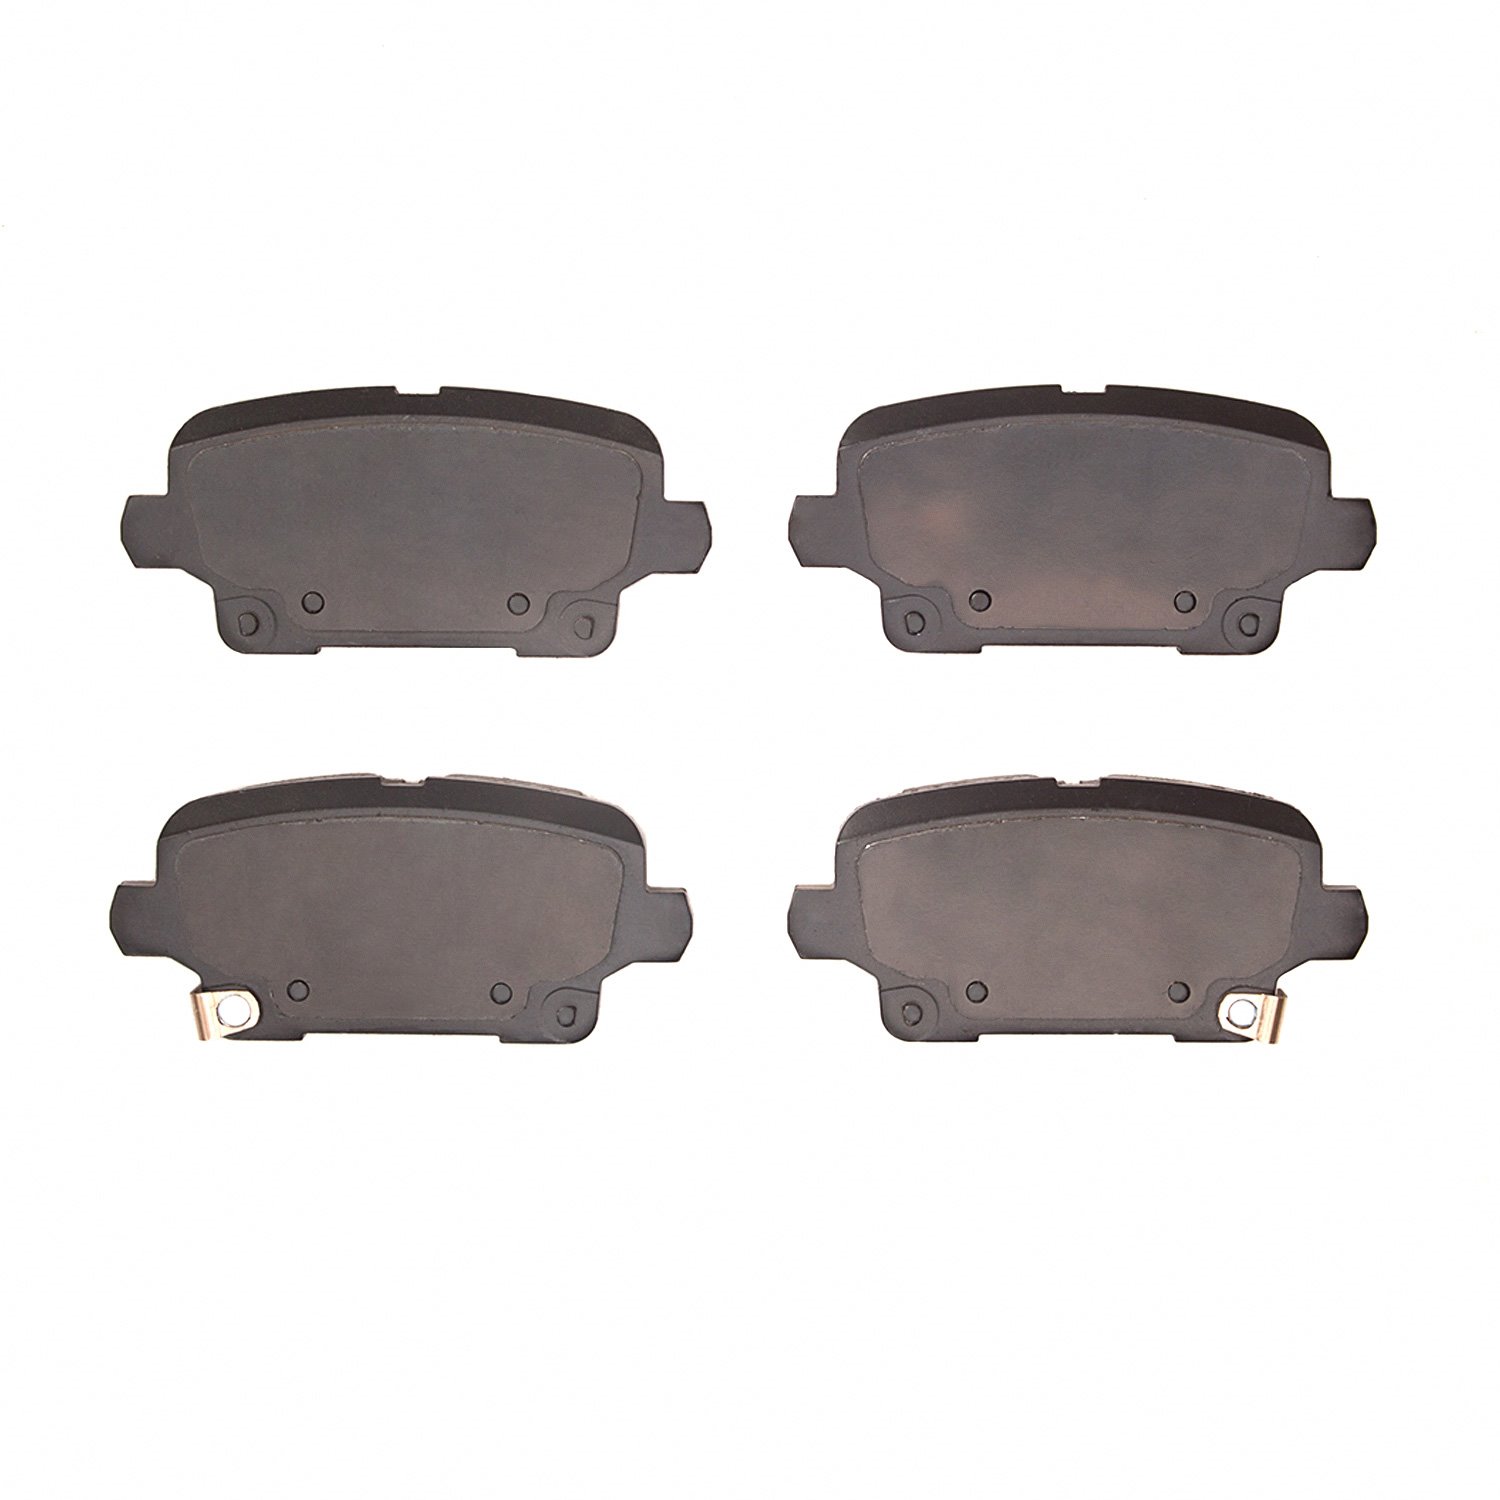 1552-2189-00 5000 Advanced Low-Metallic Brake Pads, Fits Select GM, Position: Rear